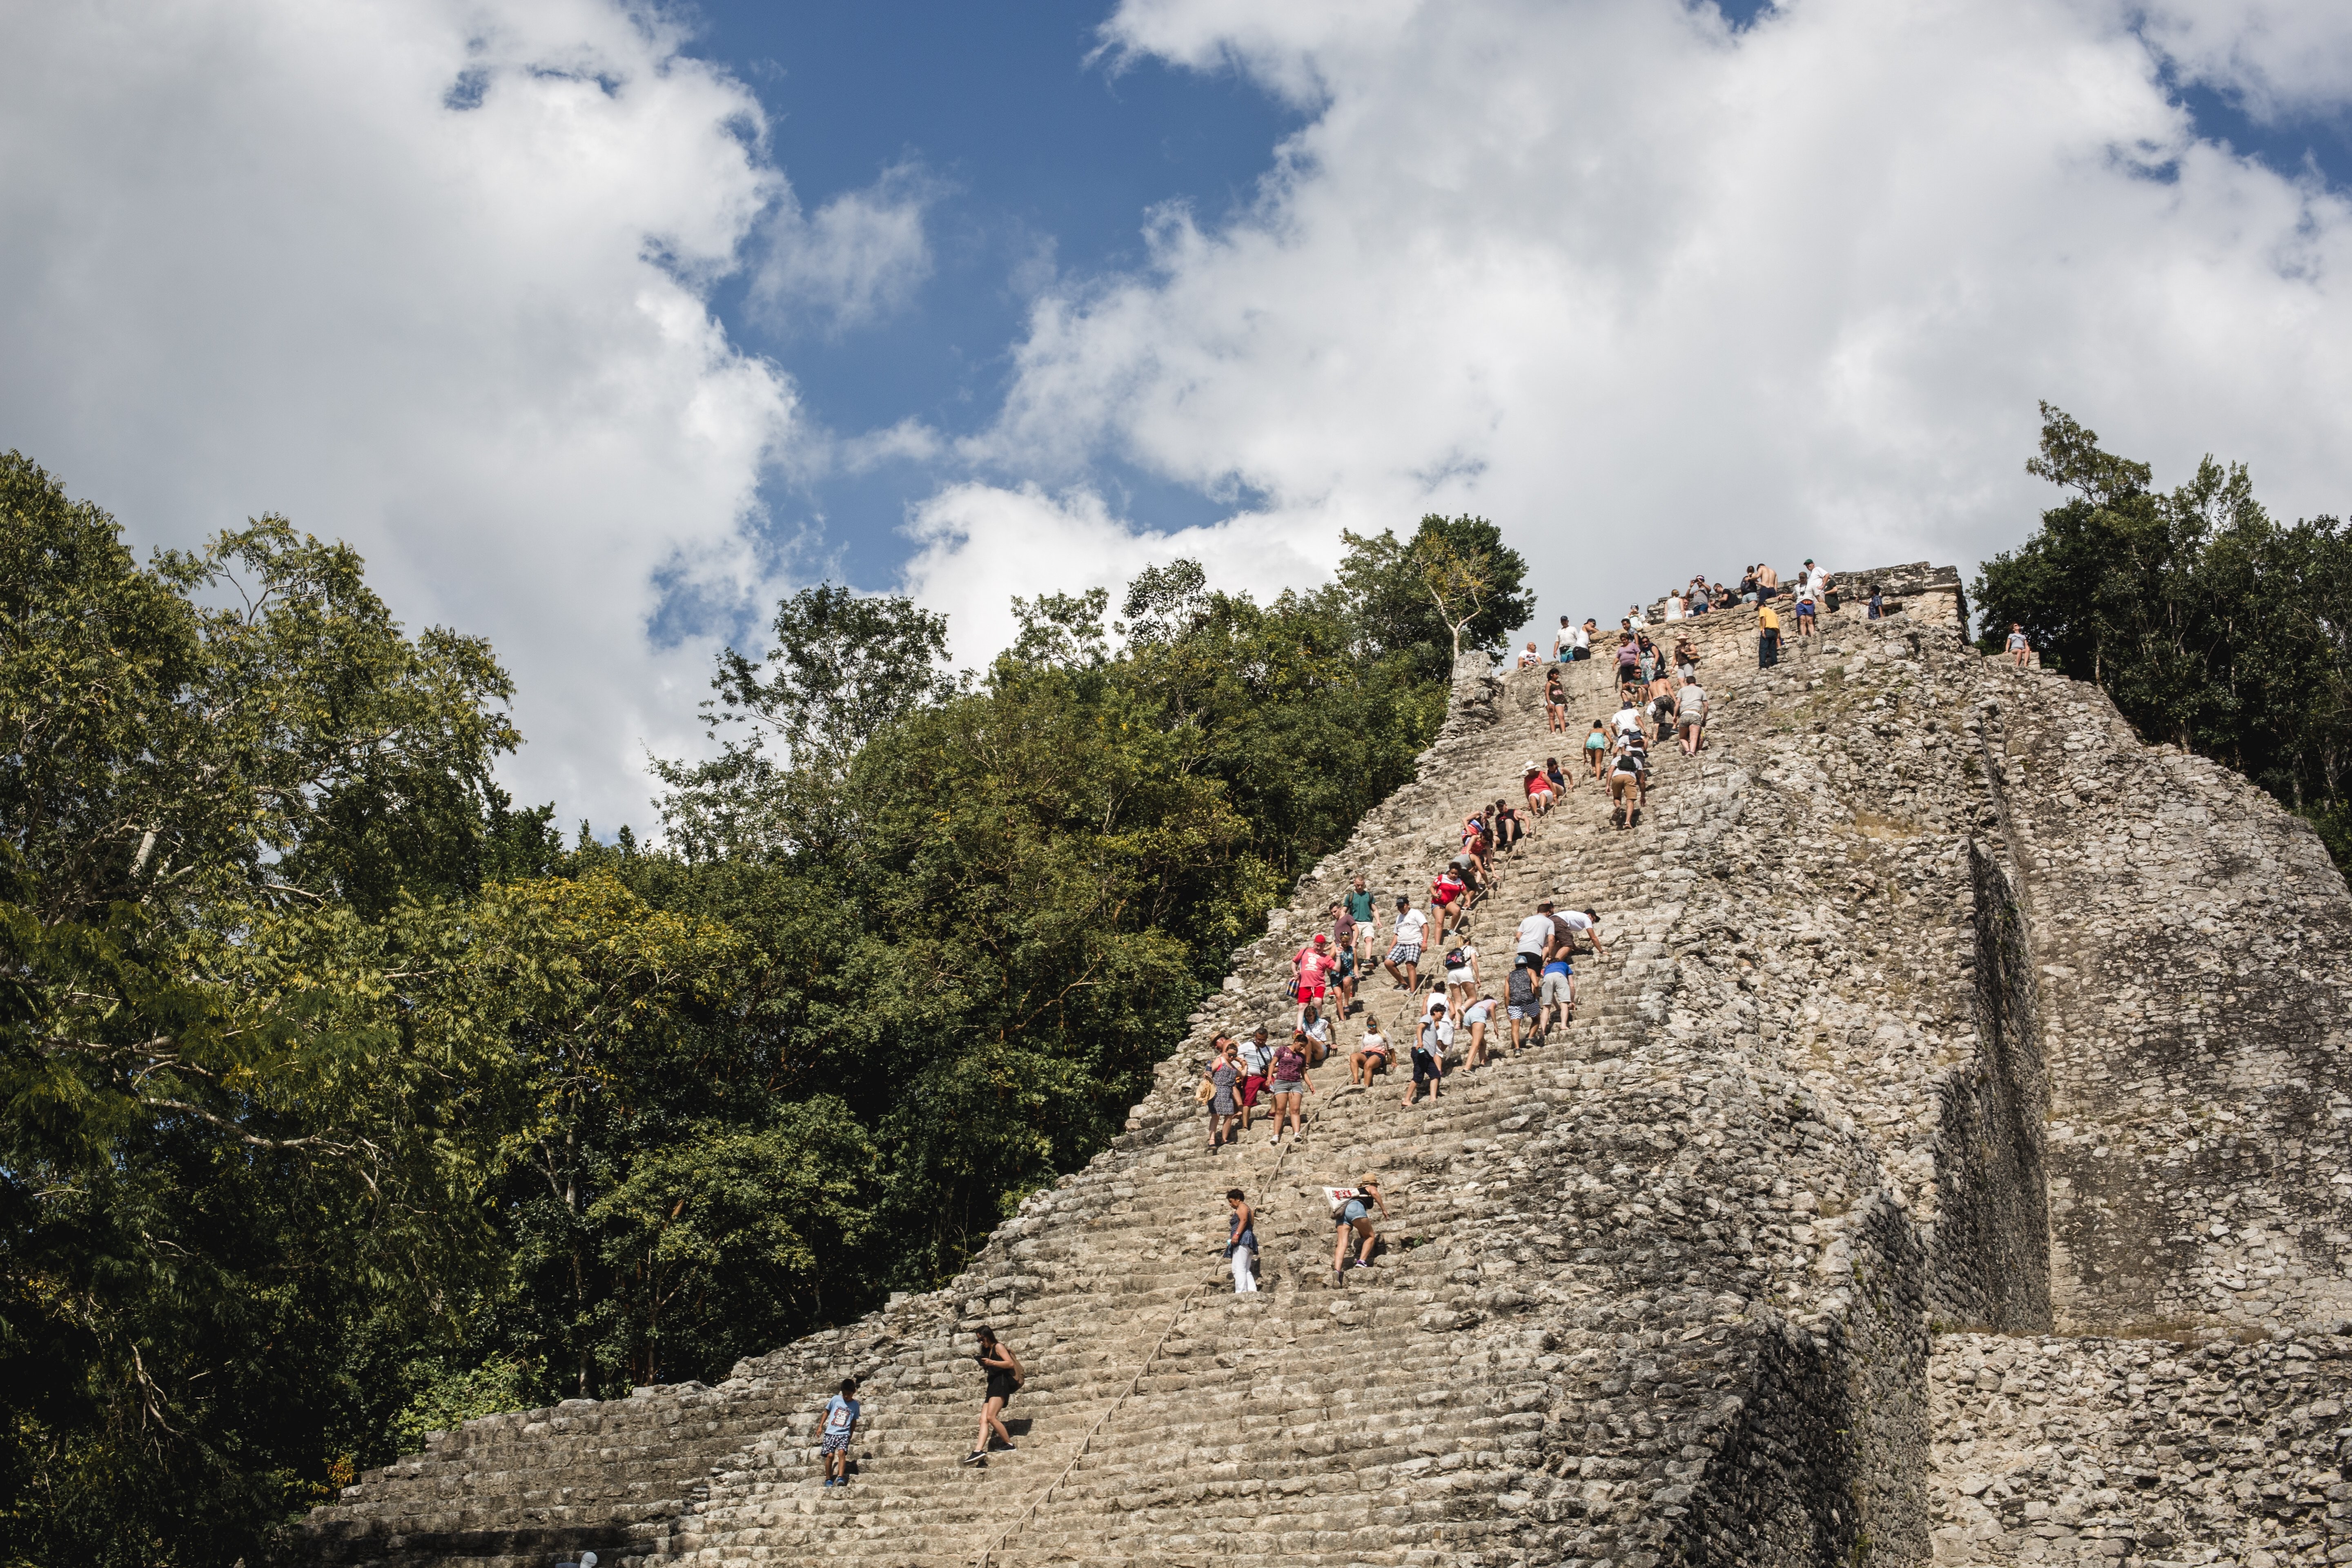 Les touristes escaladent les ruines mexicaines Photo